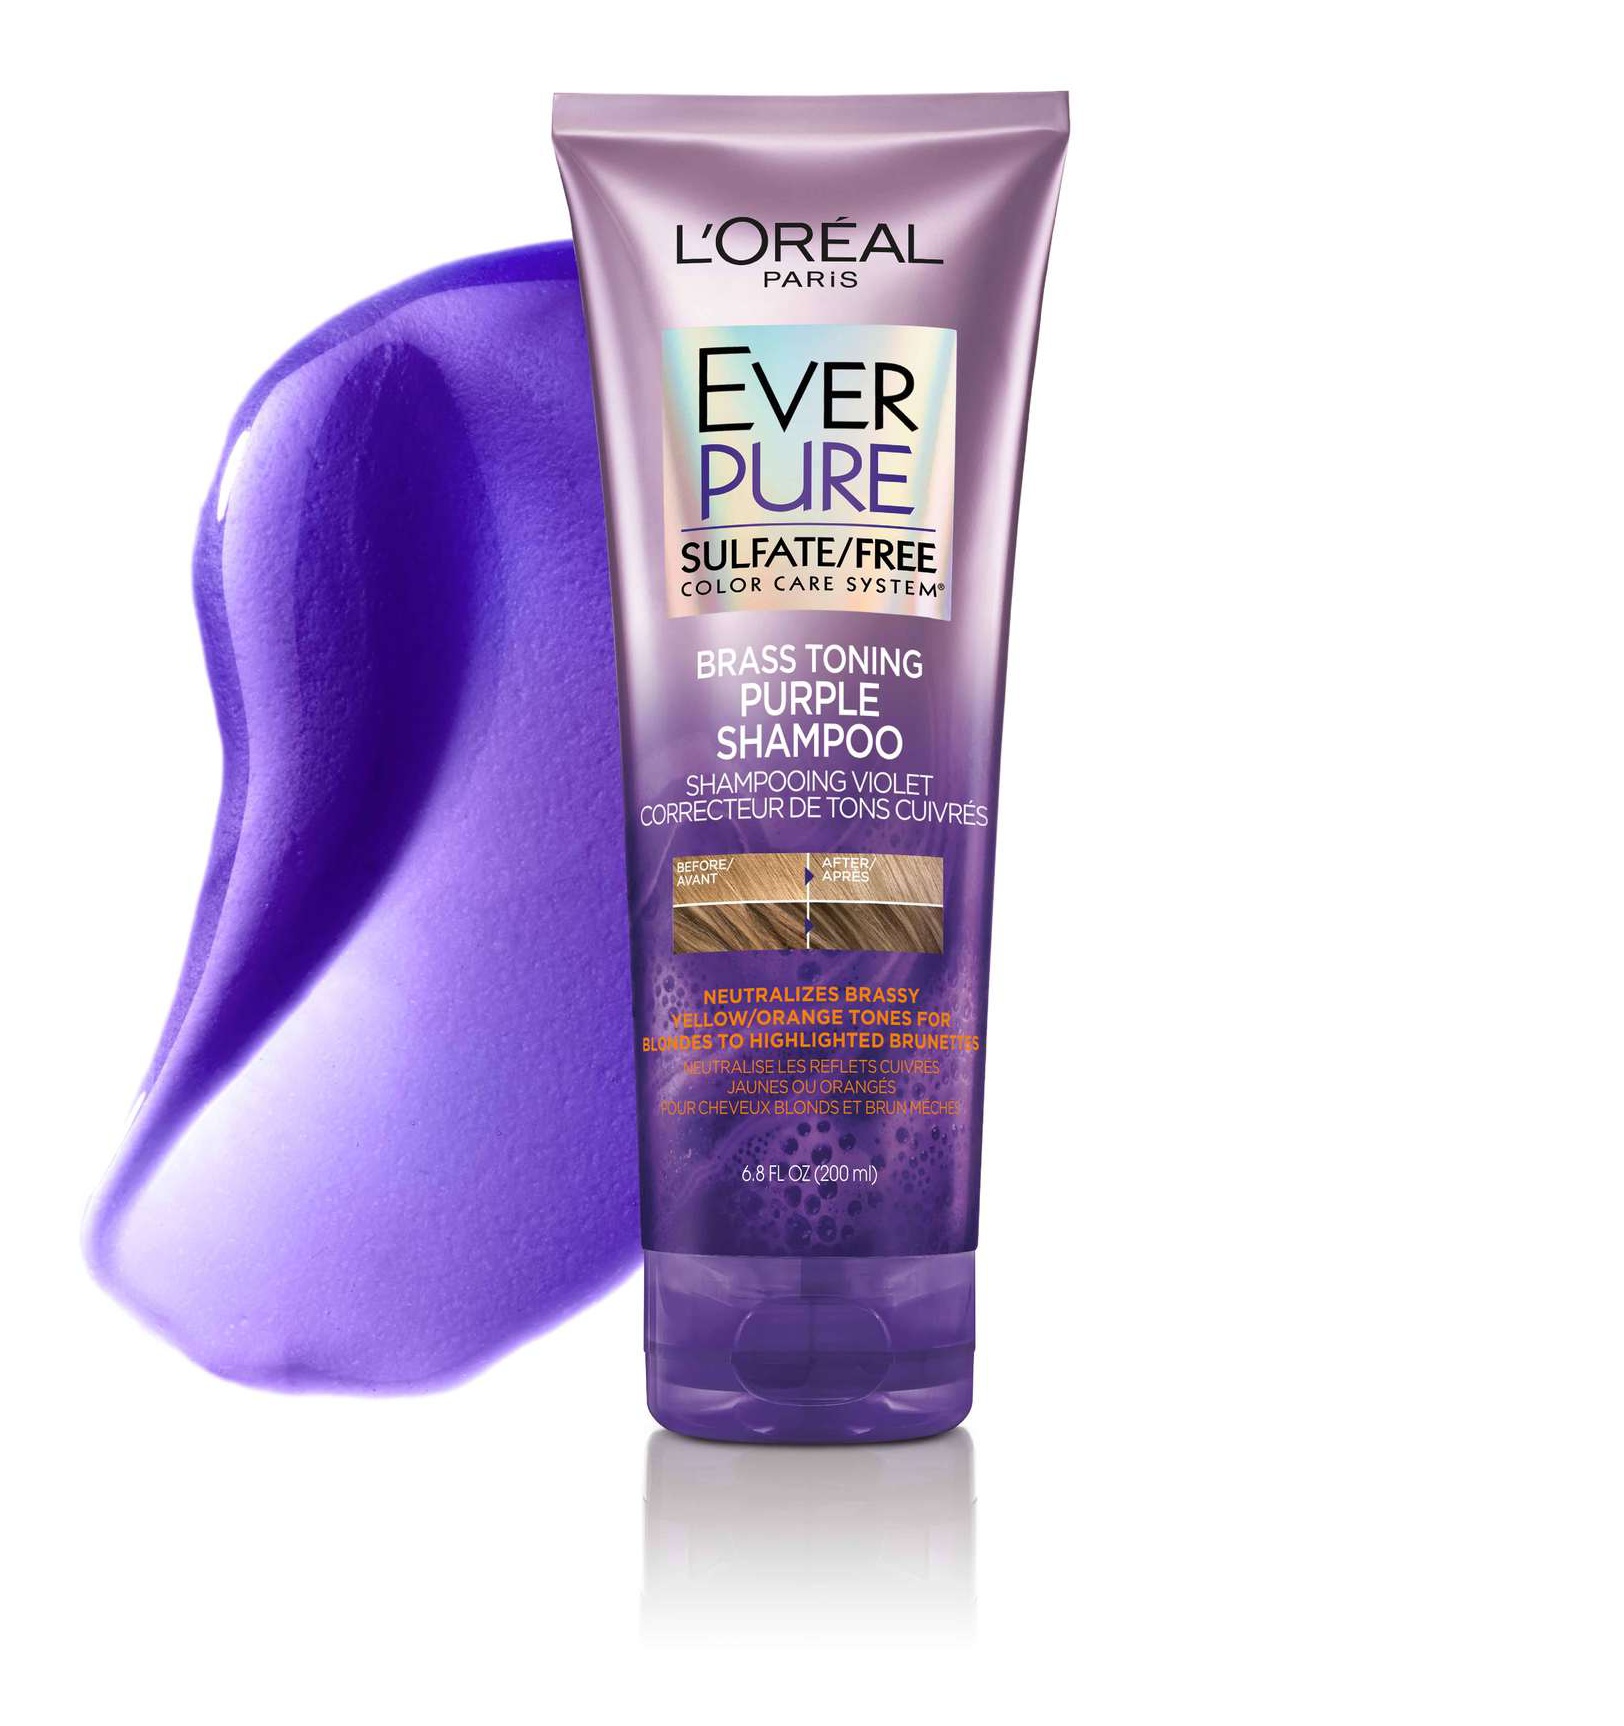 Loreal Everpure Sulfate Free Brass Toning Purple Shampoo Ingredients